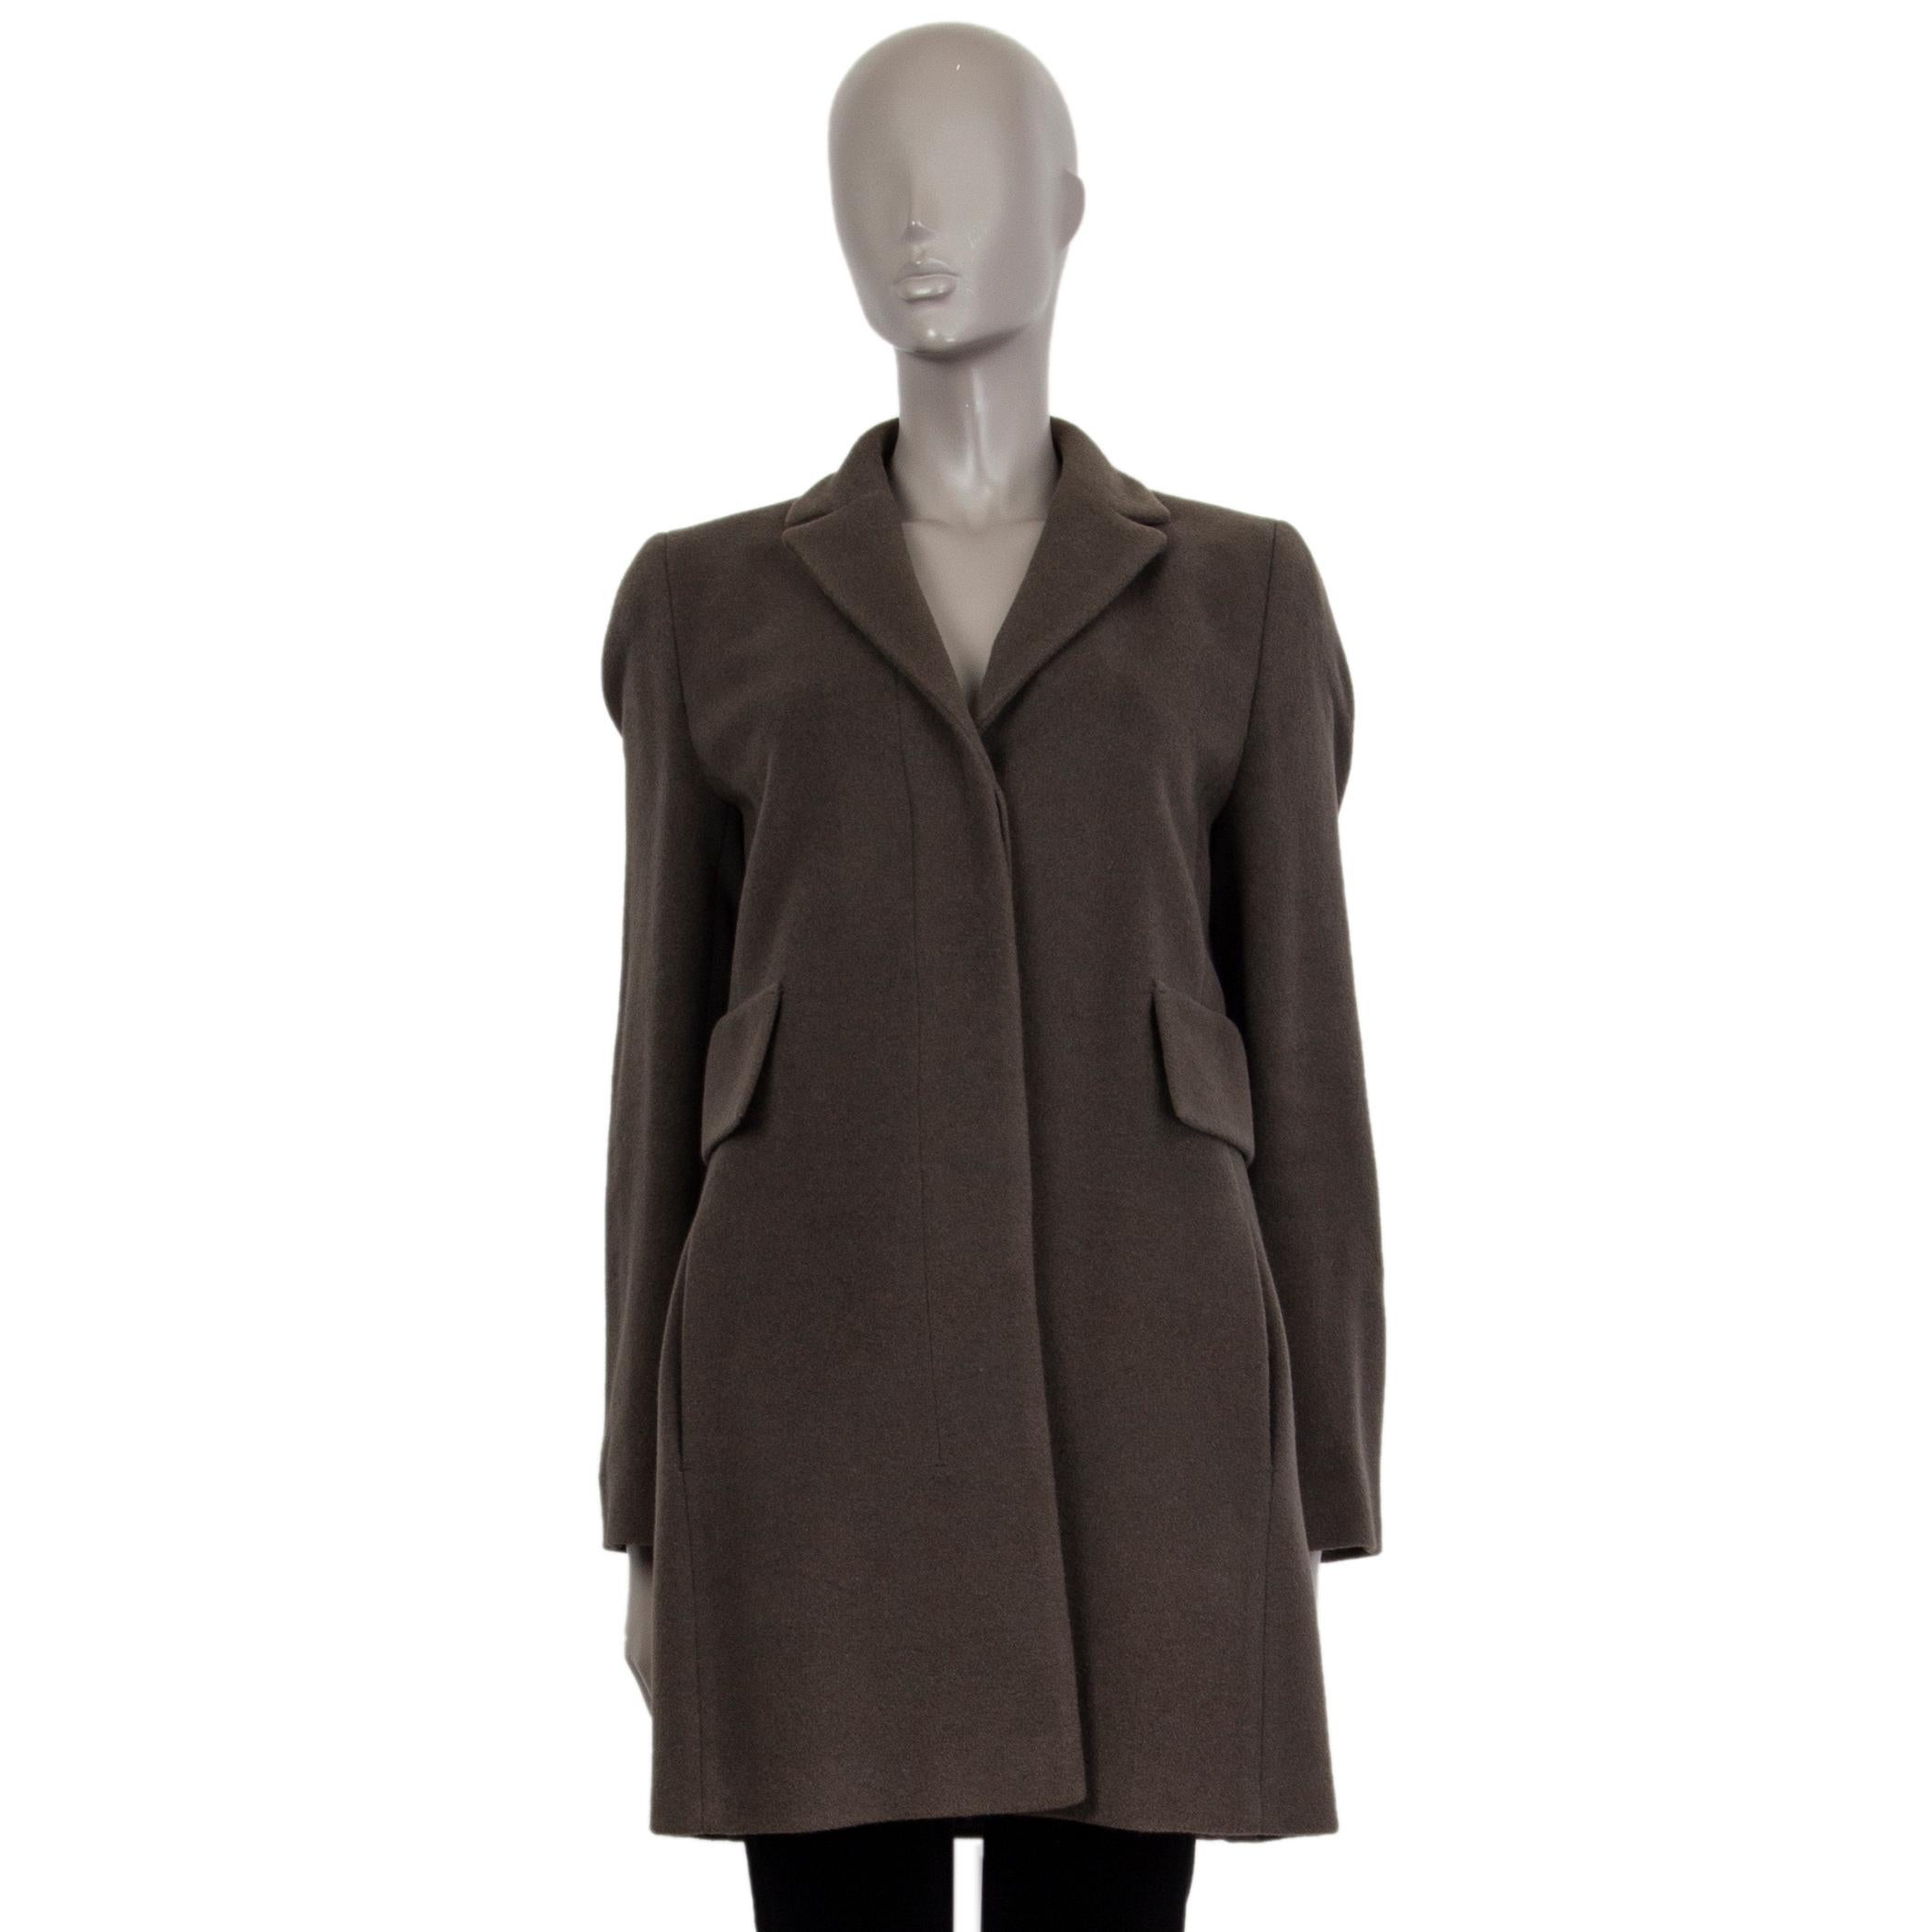 Black AKRIS PUNTO grey wool & angora CLASSIC Coat Jacket 38 M